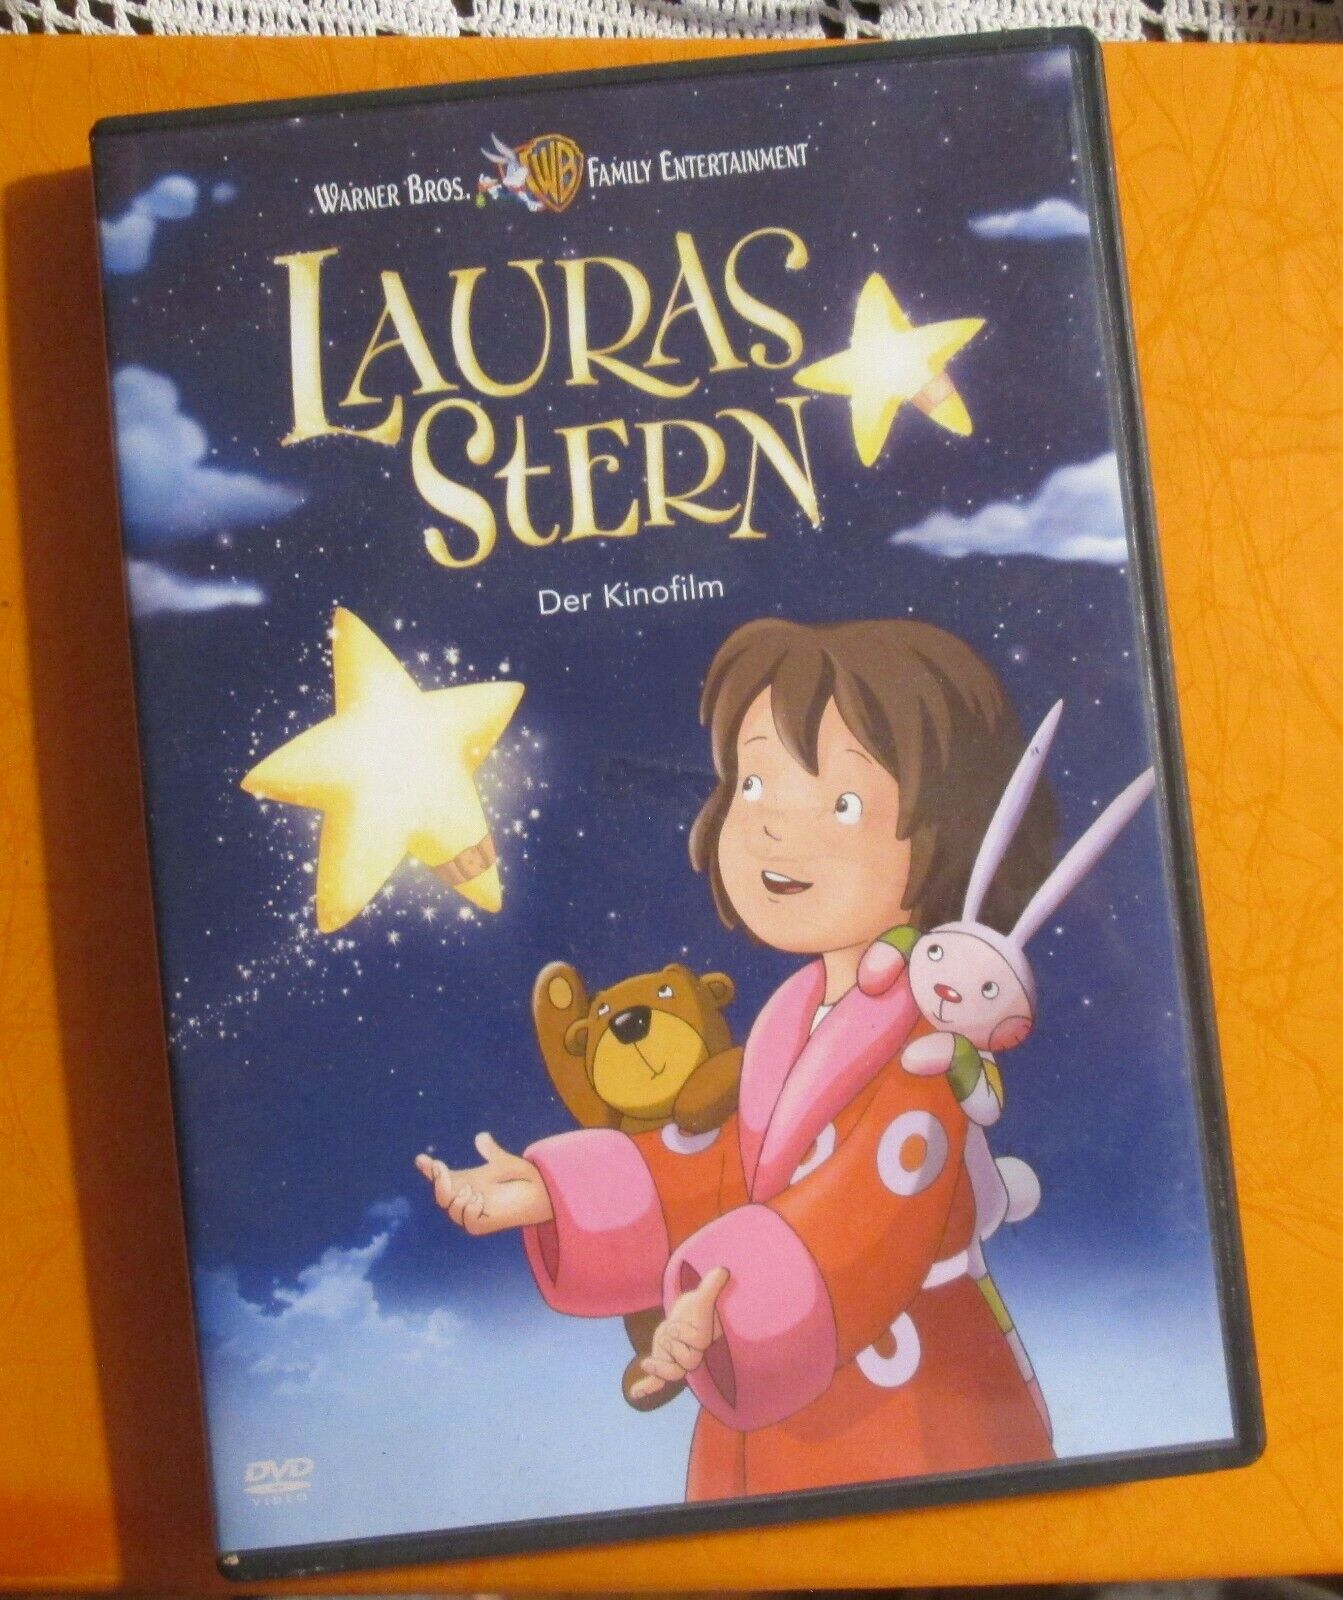 Lauras Stern DVD 77 min, region 2